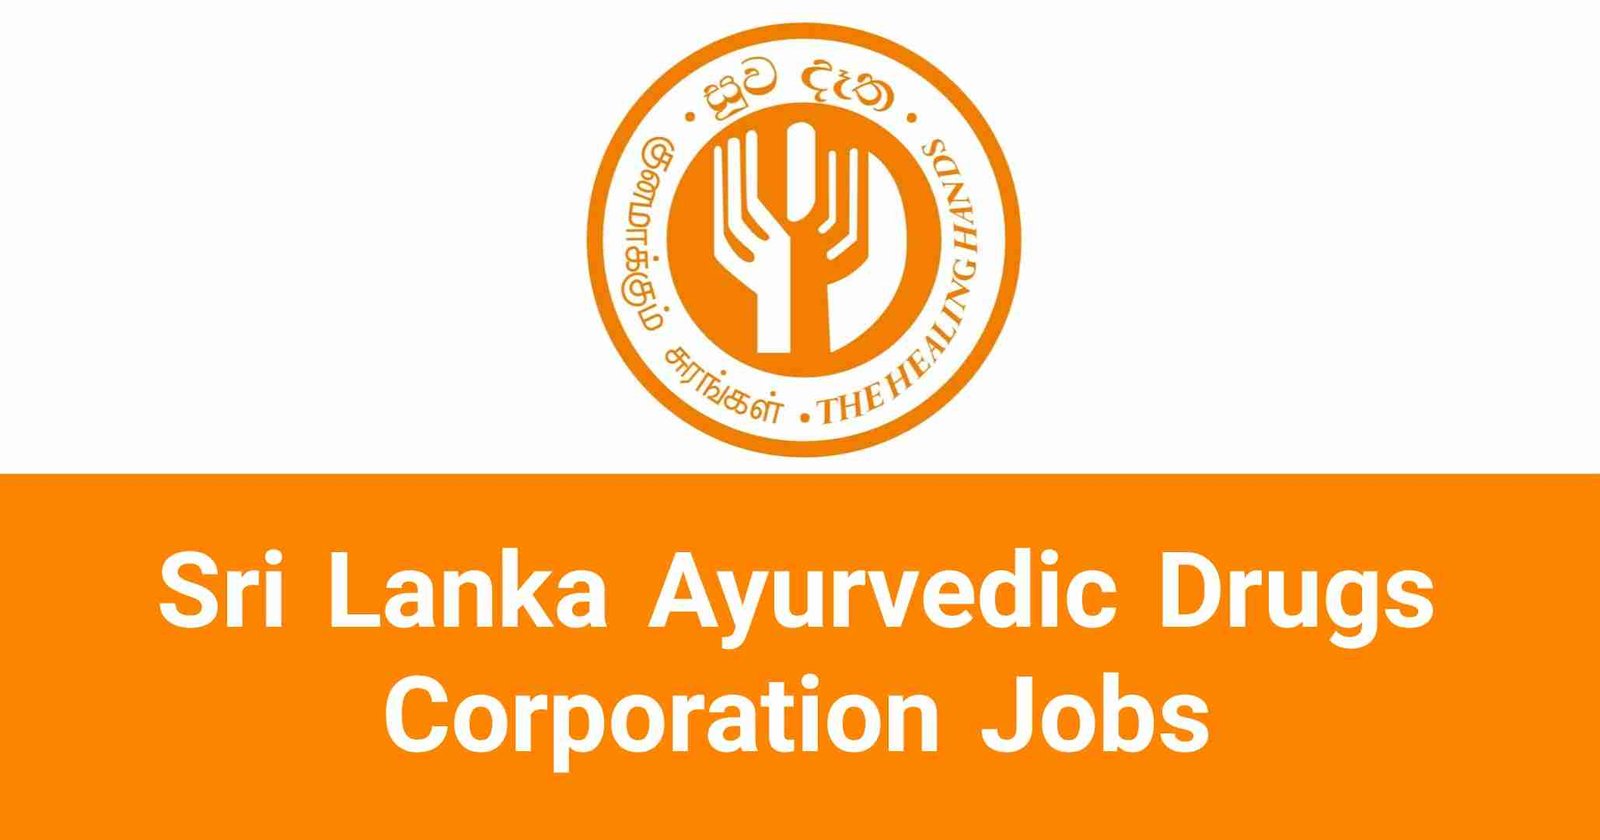 Ayurvedic Drugs Corporation Jobs Vacancies